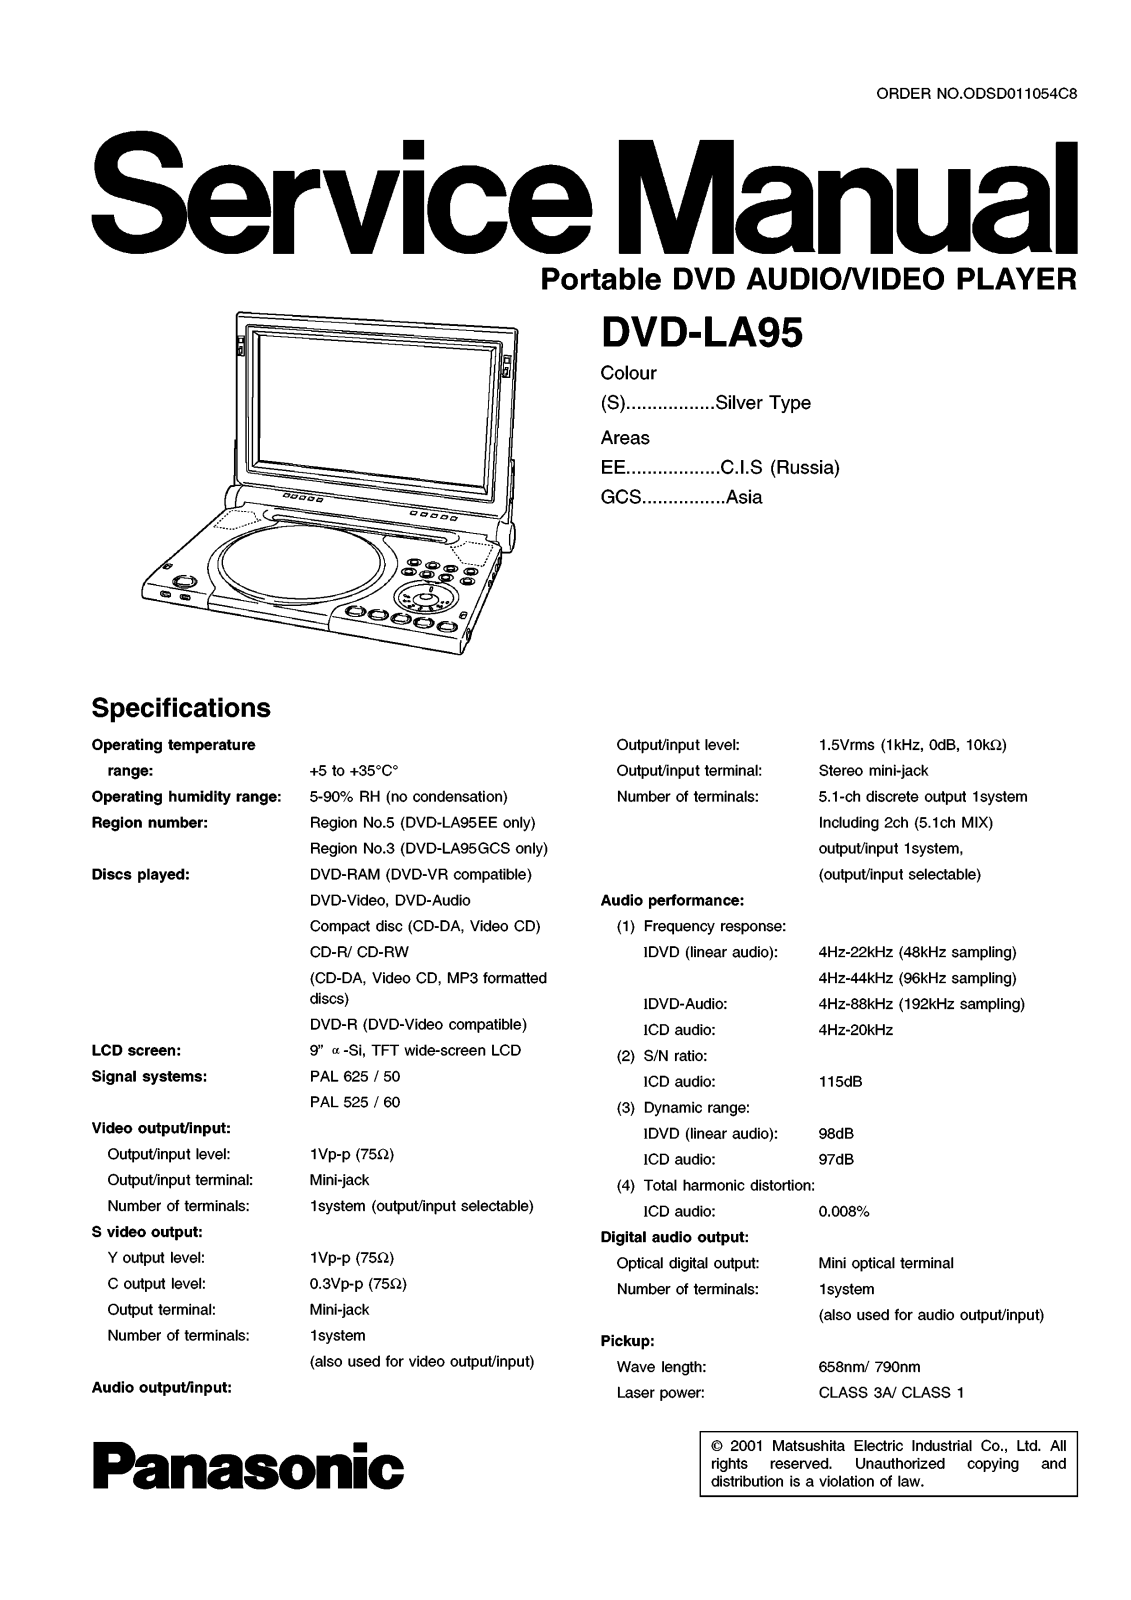 Panasonic DVDLA-95 Service manual